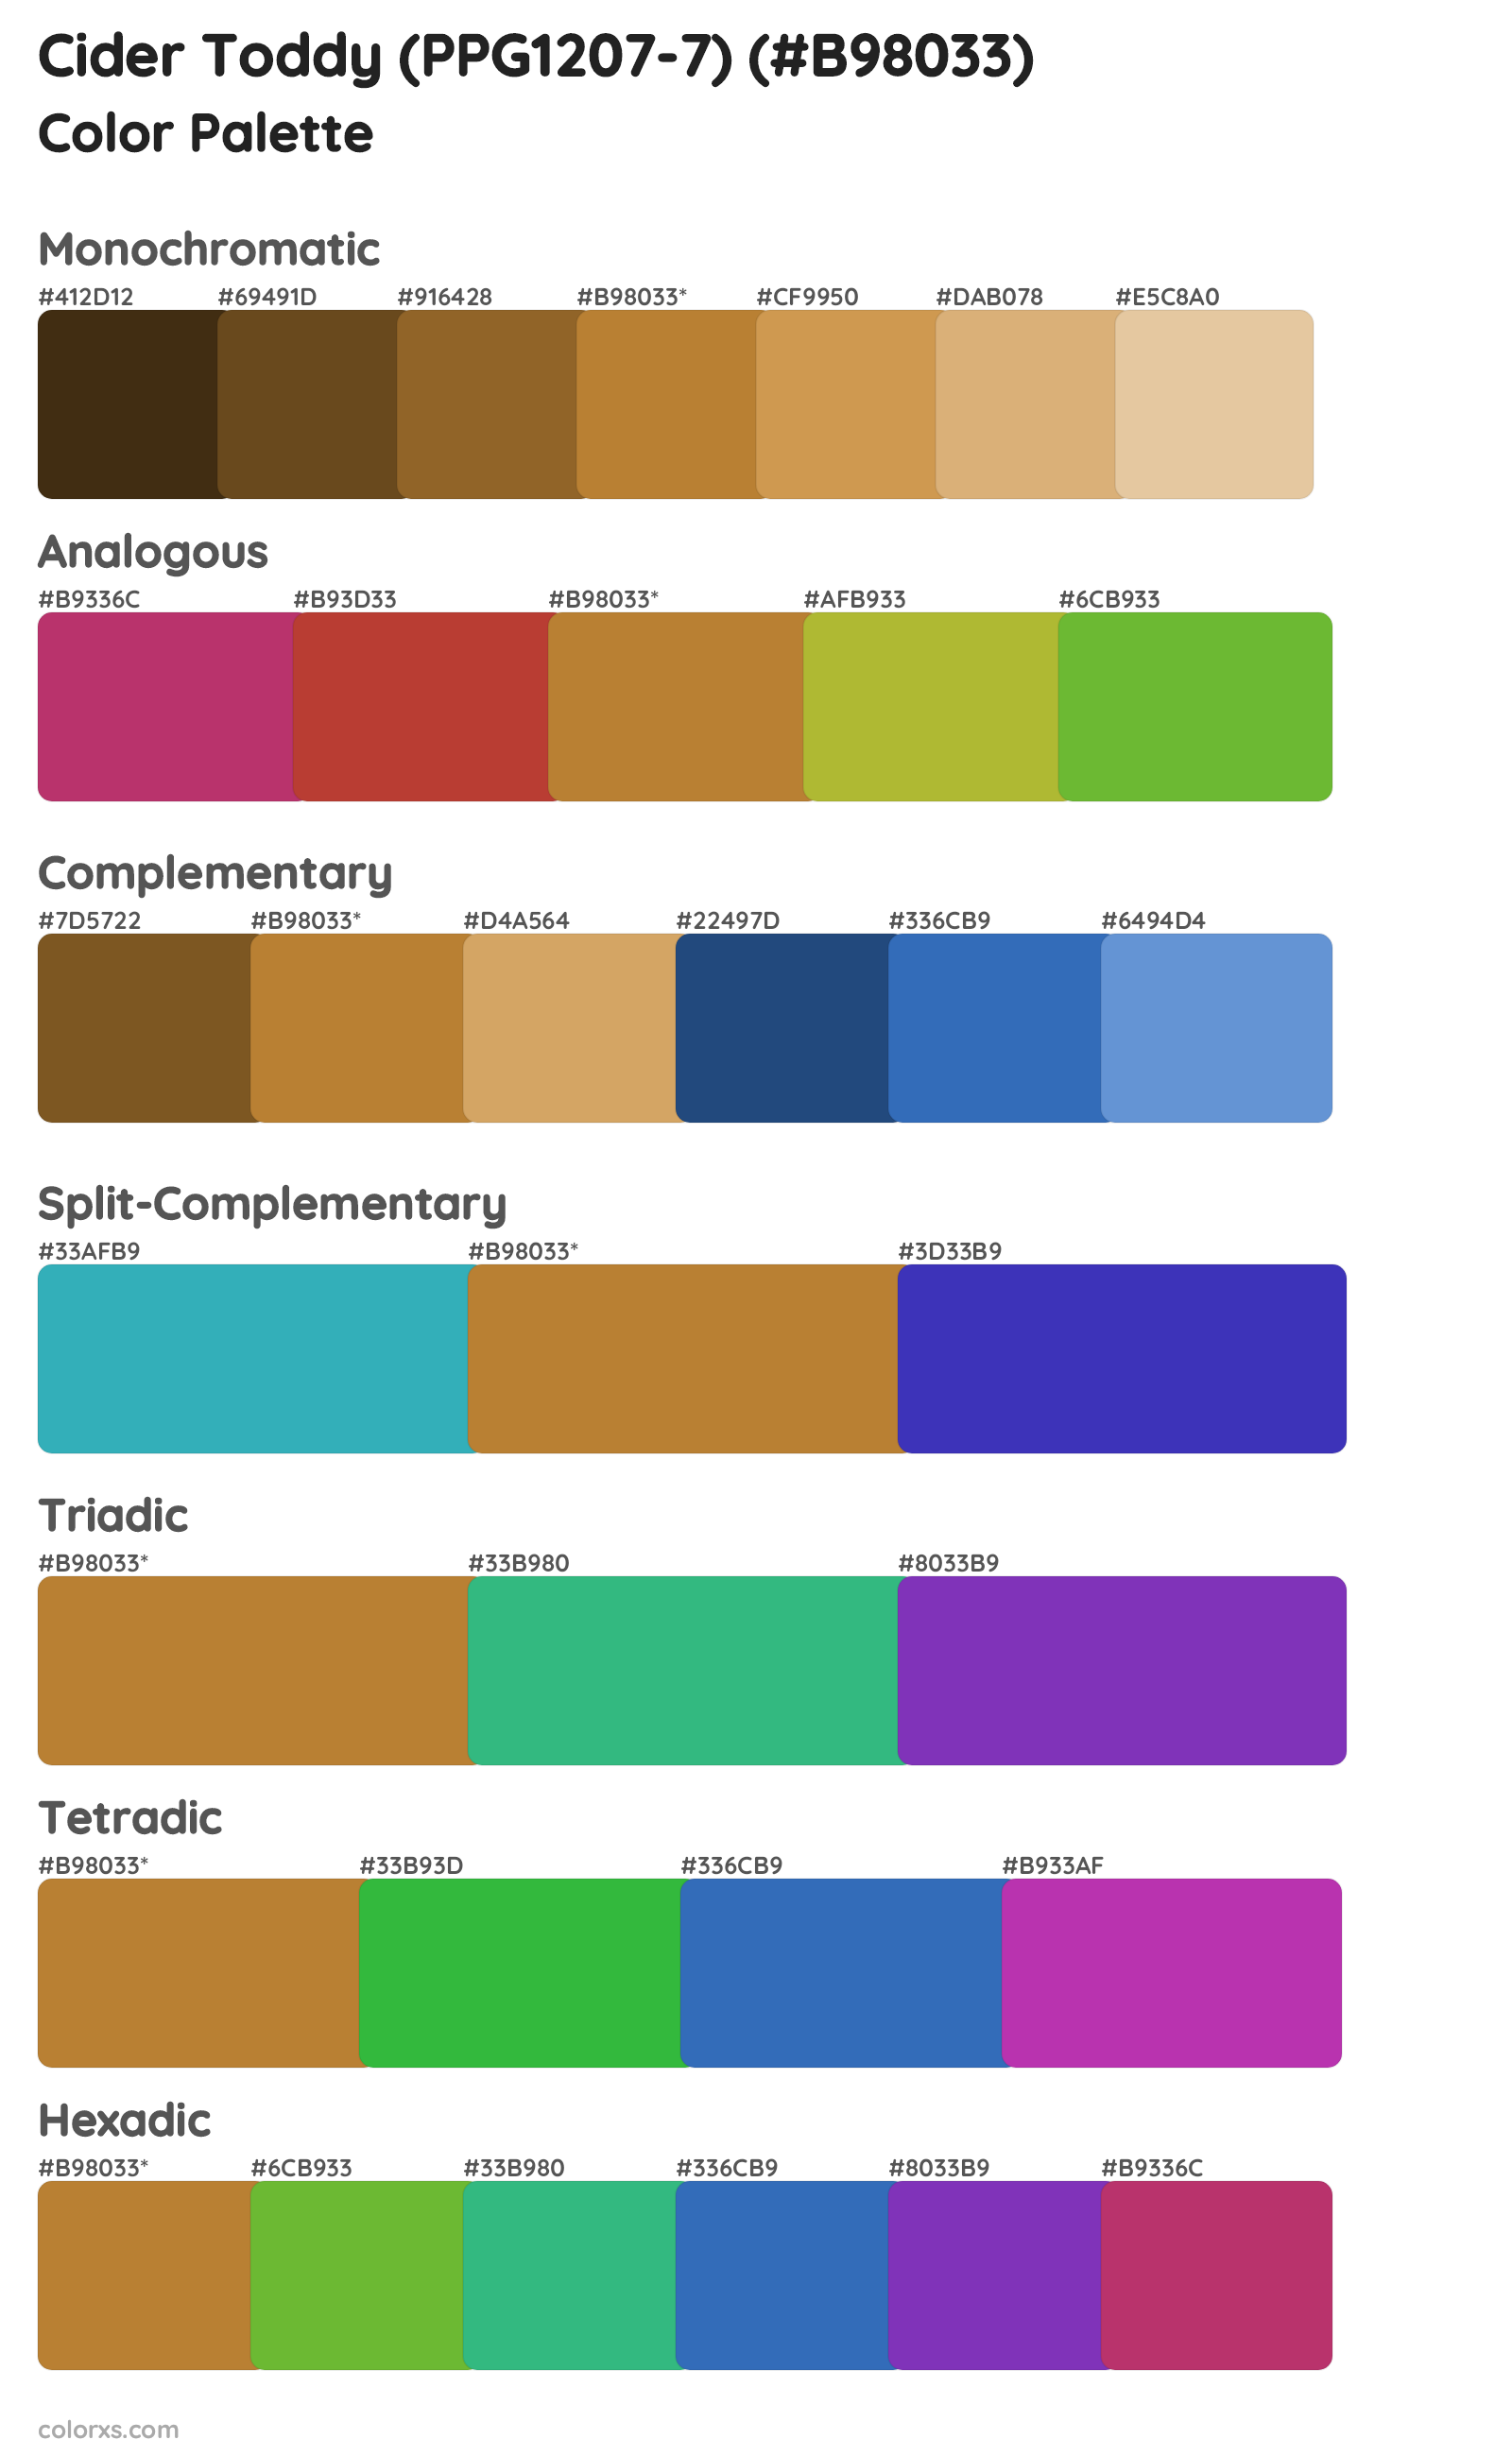 Cider Toddy (PPG1207-7) Color Scheme Palettes